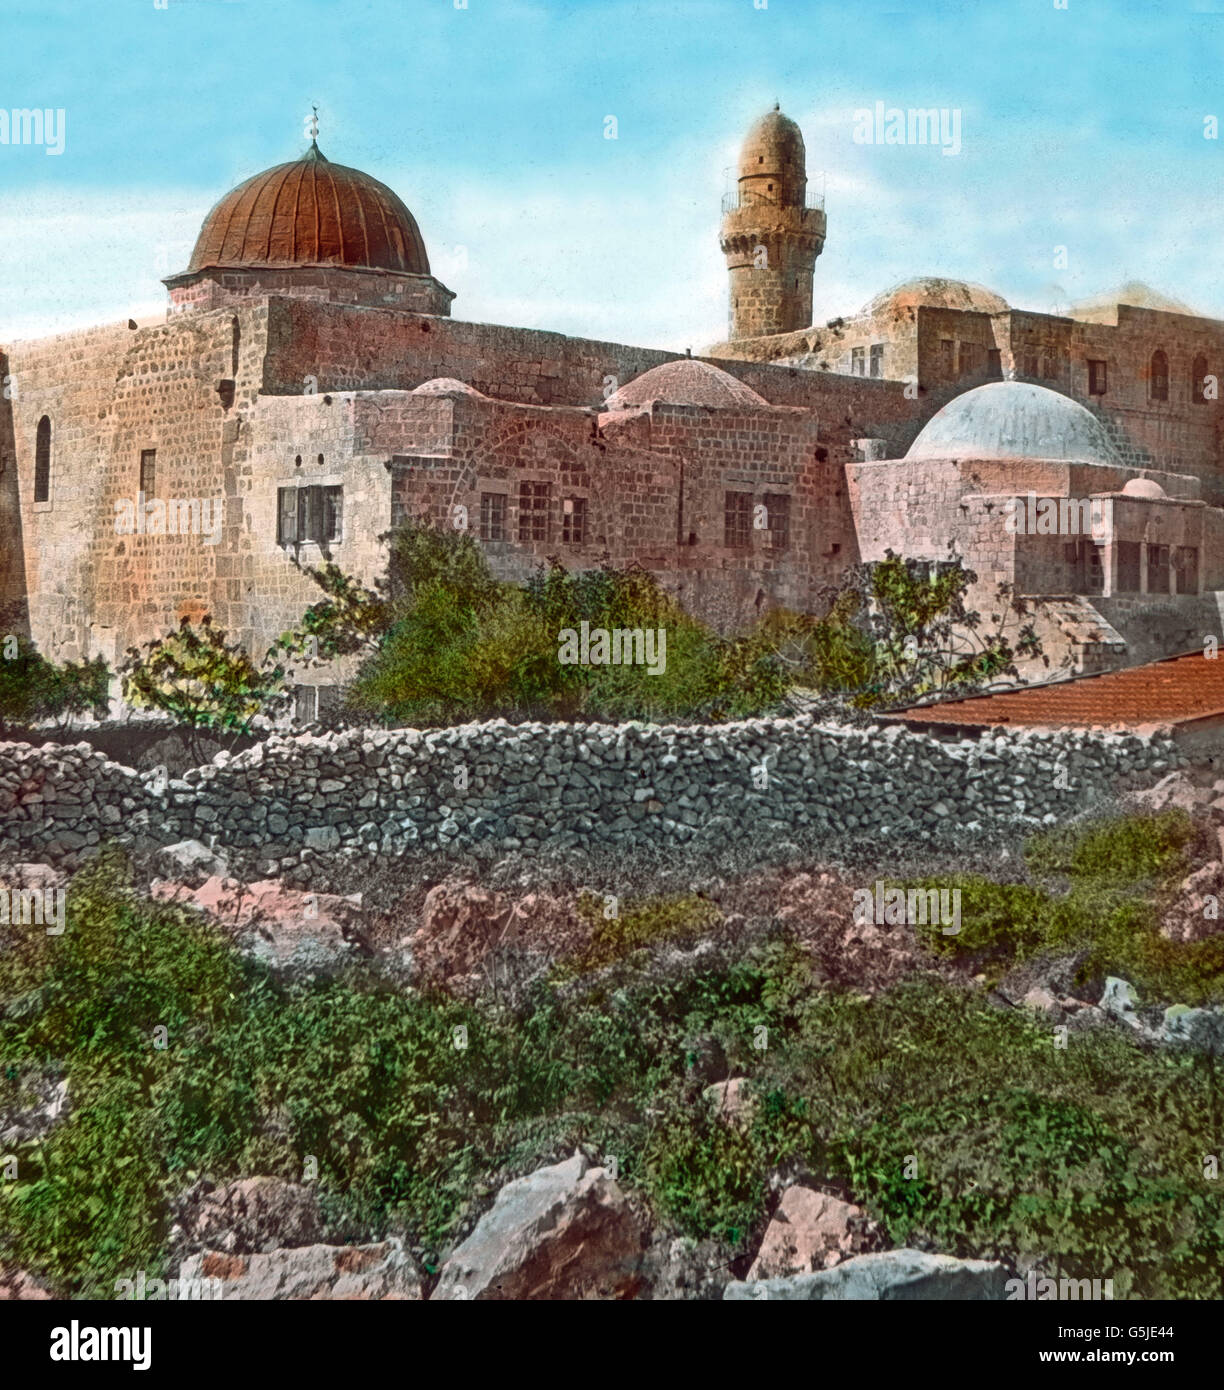 Das Grab Davids und Salomons, Jerusalem, 1920er Jahre. Tomb of King David  and Solomon, Jerusalem 1920s Stock Photo - Alamy